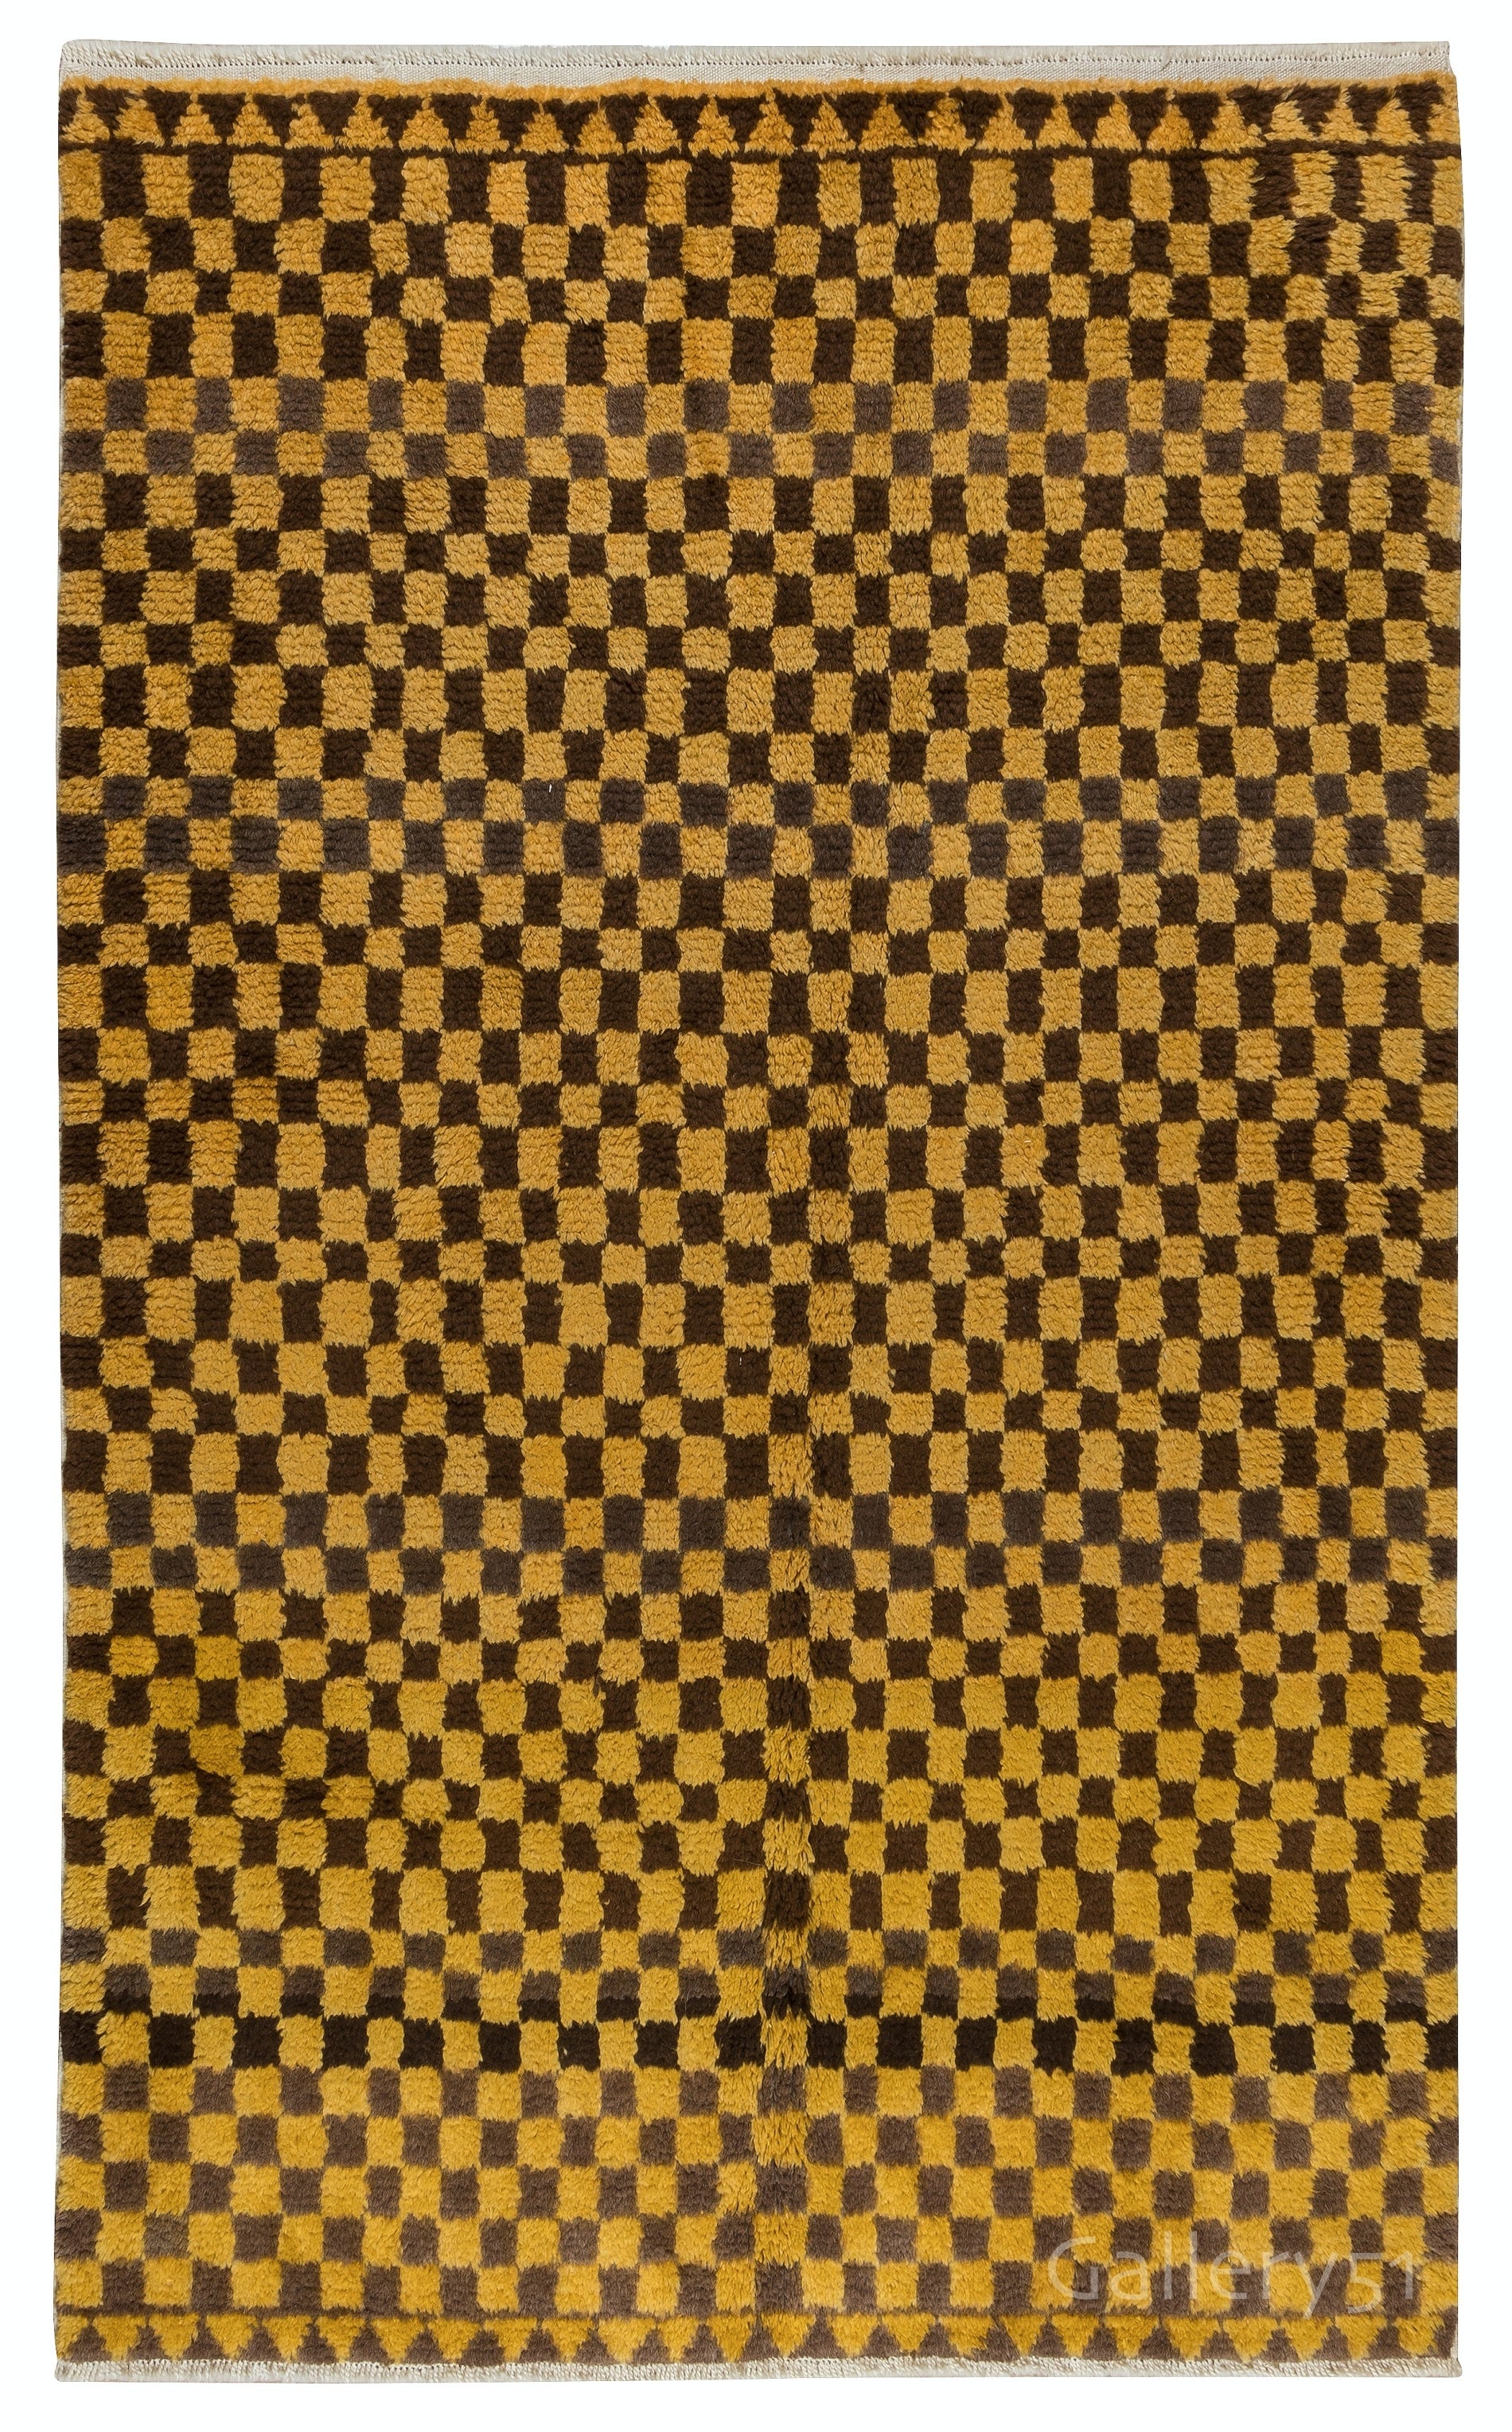 5x8.3 Ft Custom Handmade Checkered Design Tulu Rug in Brown & Mustard. All Wool For Sale